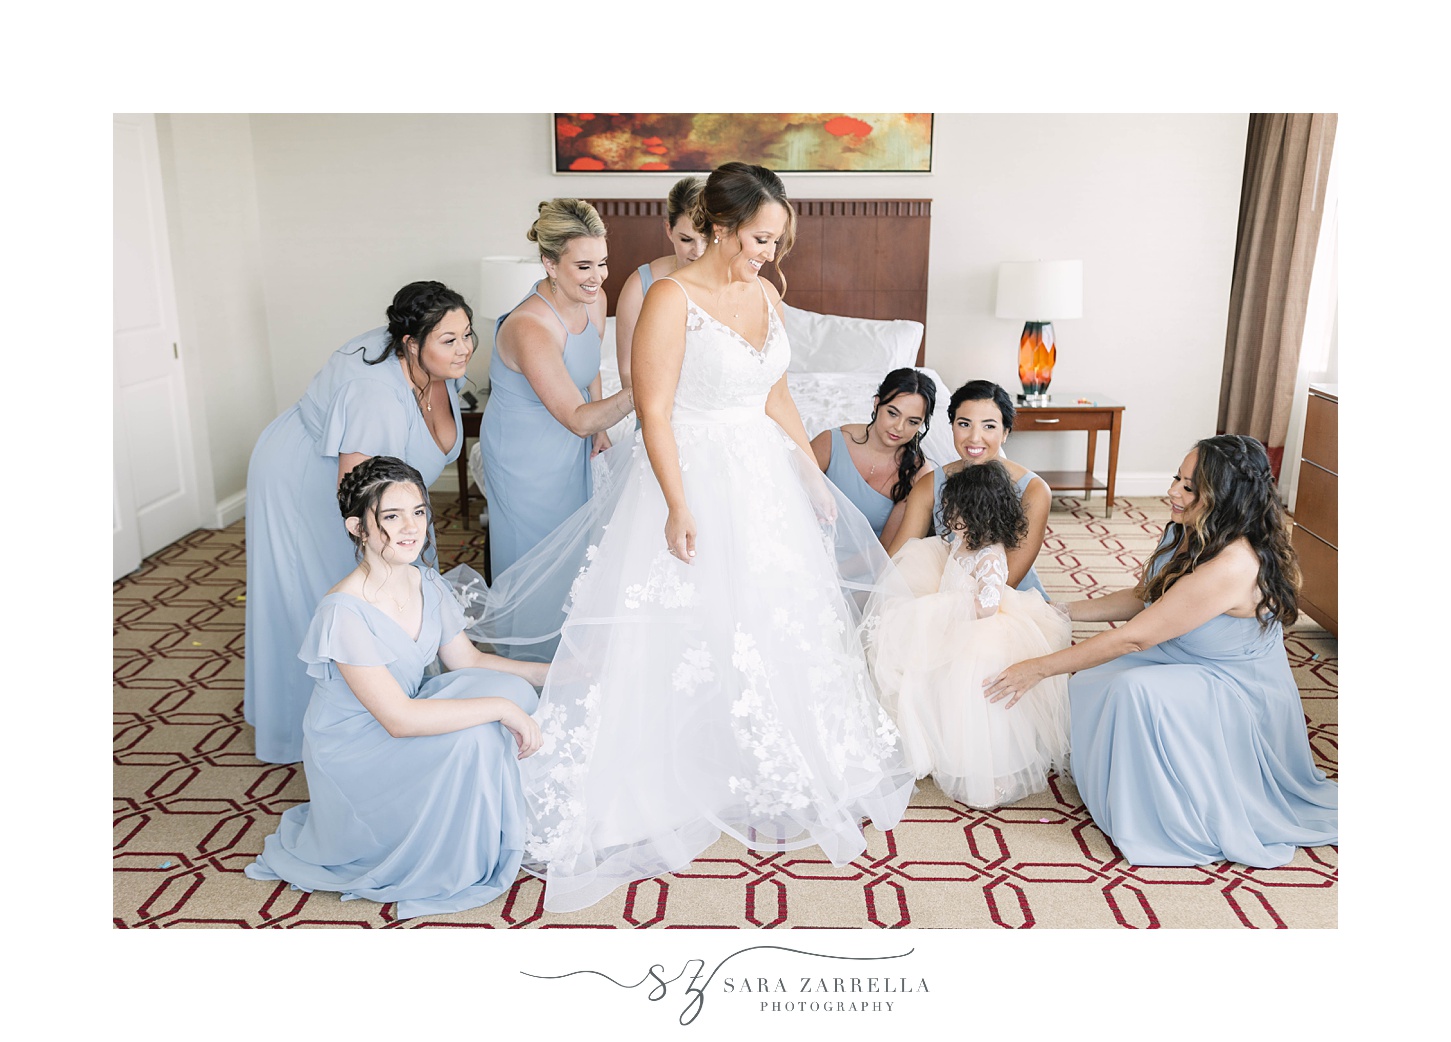 bridesmaids help bride with wedding gown